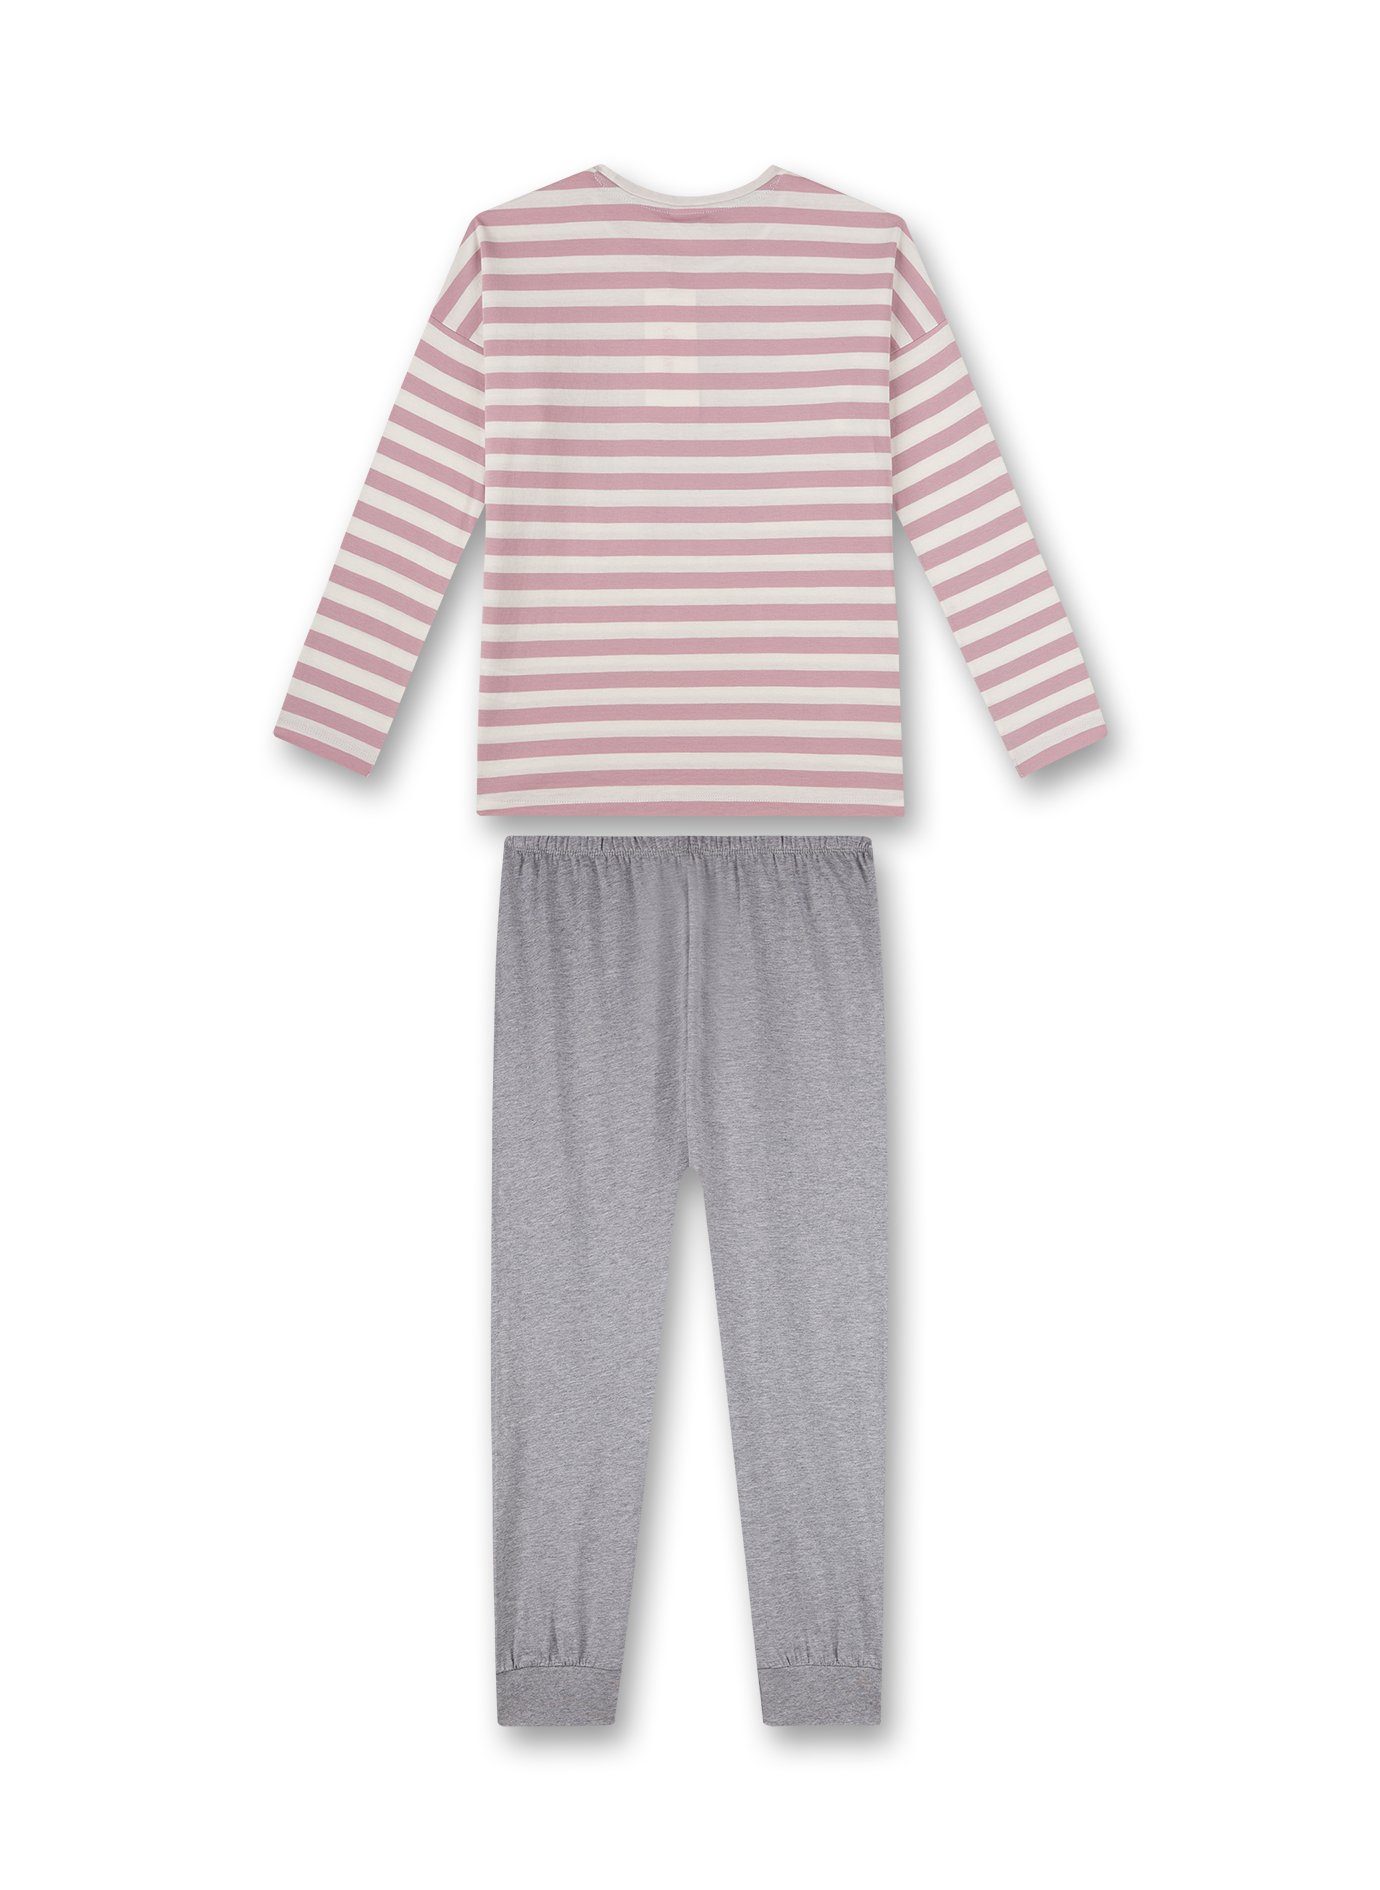 tlg) s.Oliver Mädchen grau Pyjama s.Oliver Schlafanzug rosa Pyjama lang Junior (2 Stripes Blumen